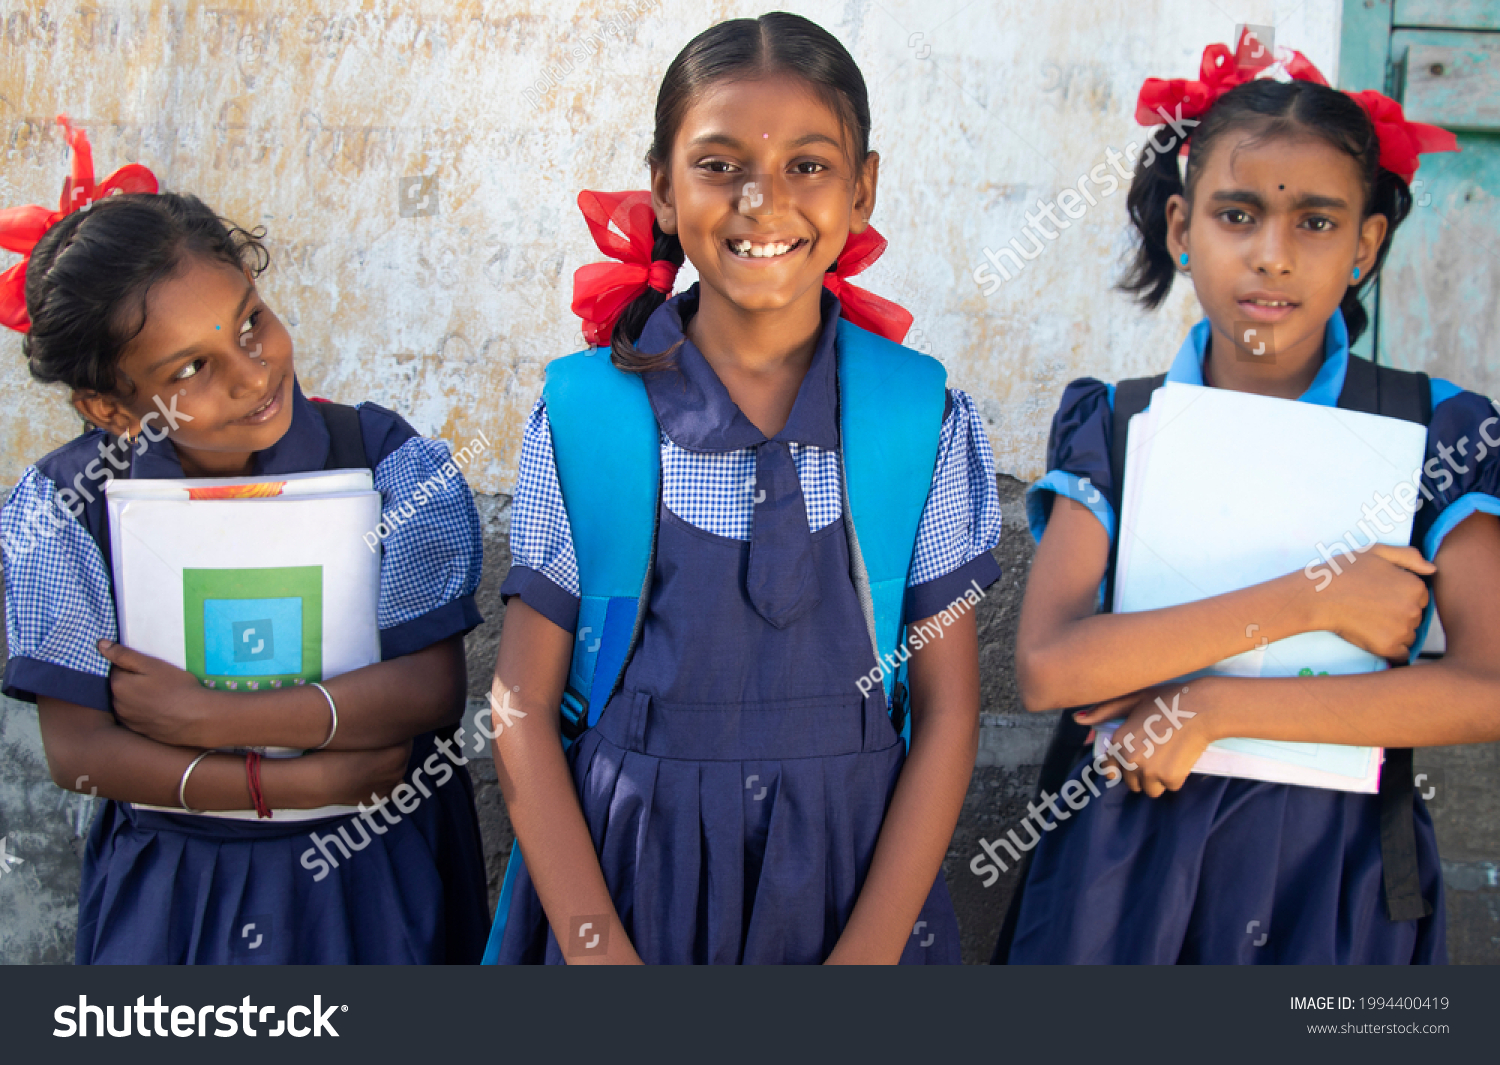 Indian Rural School Girls Holding Books Standing in School #1994400419